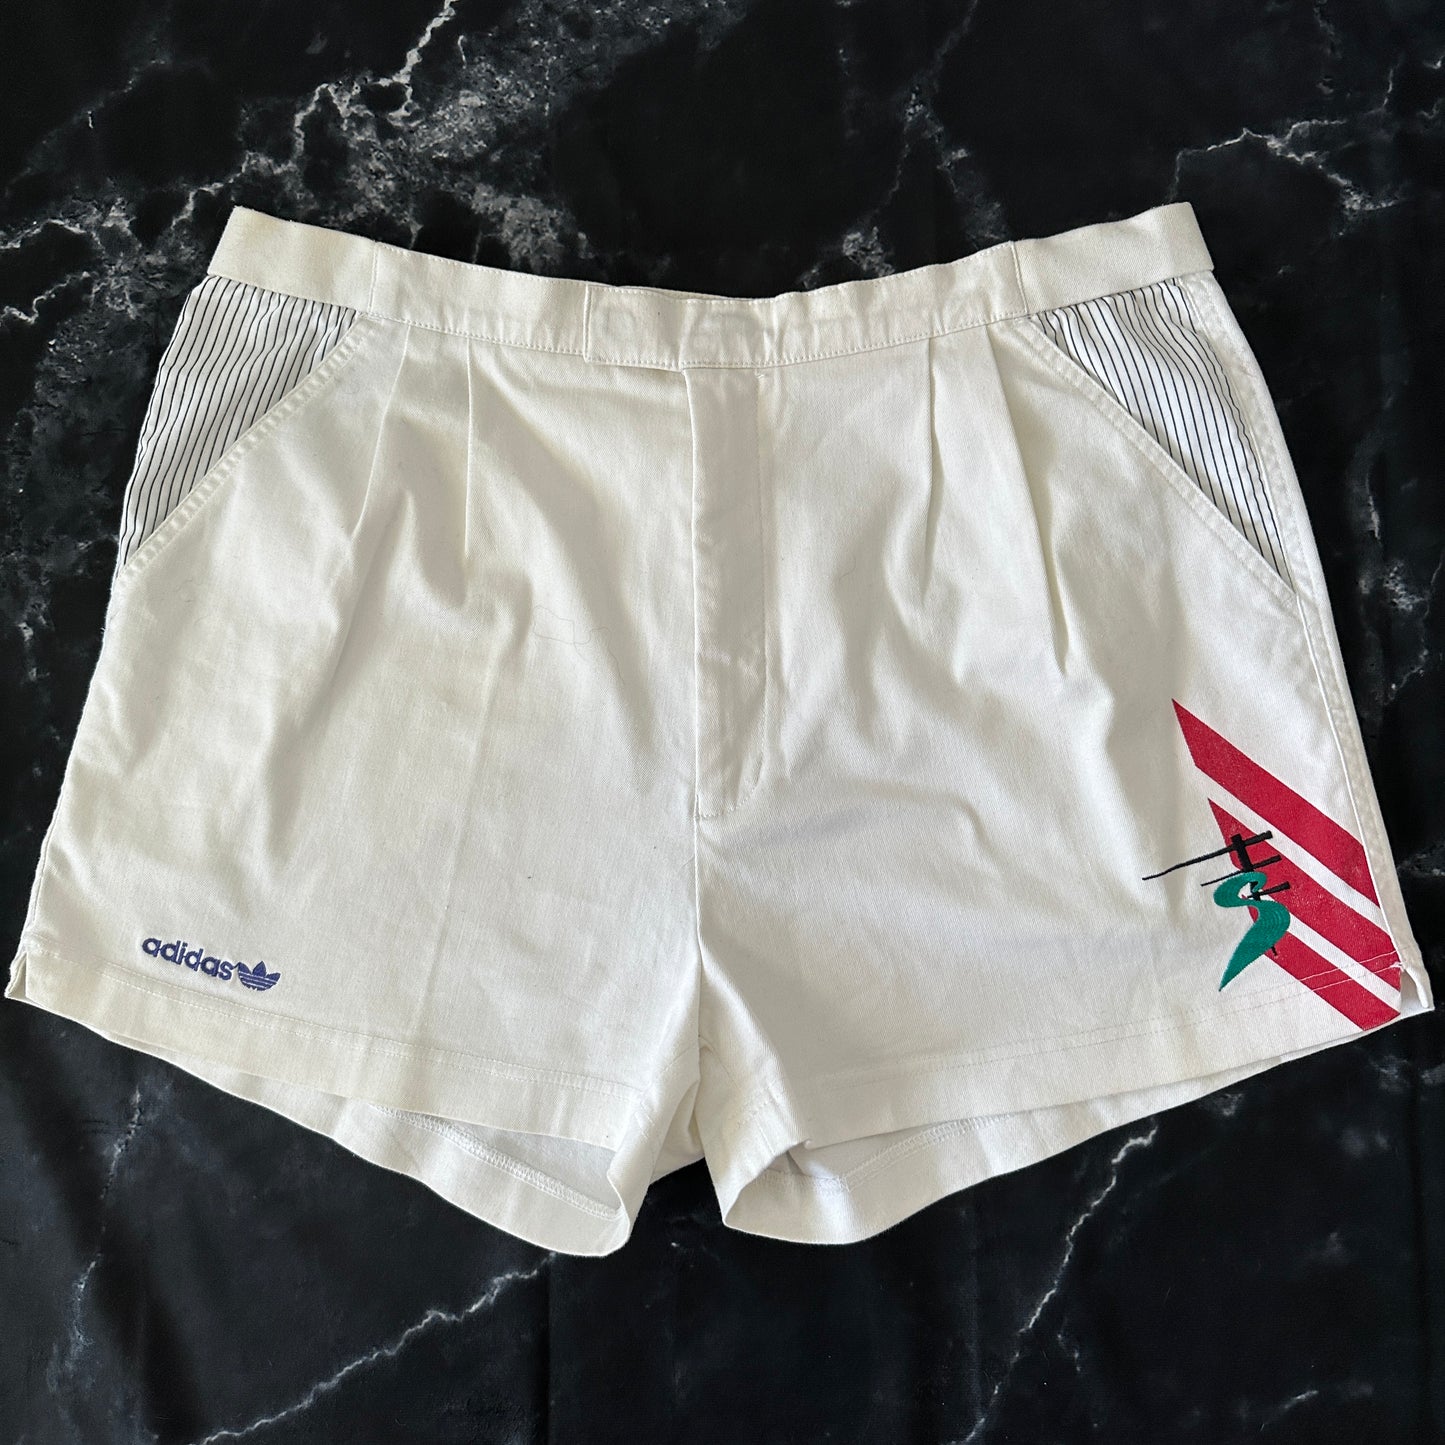 Adidas Vintage 80s Edberg Tennis Shorts - White - 52 / L